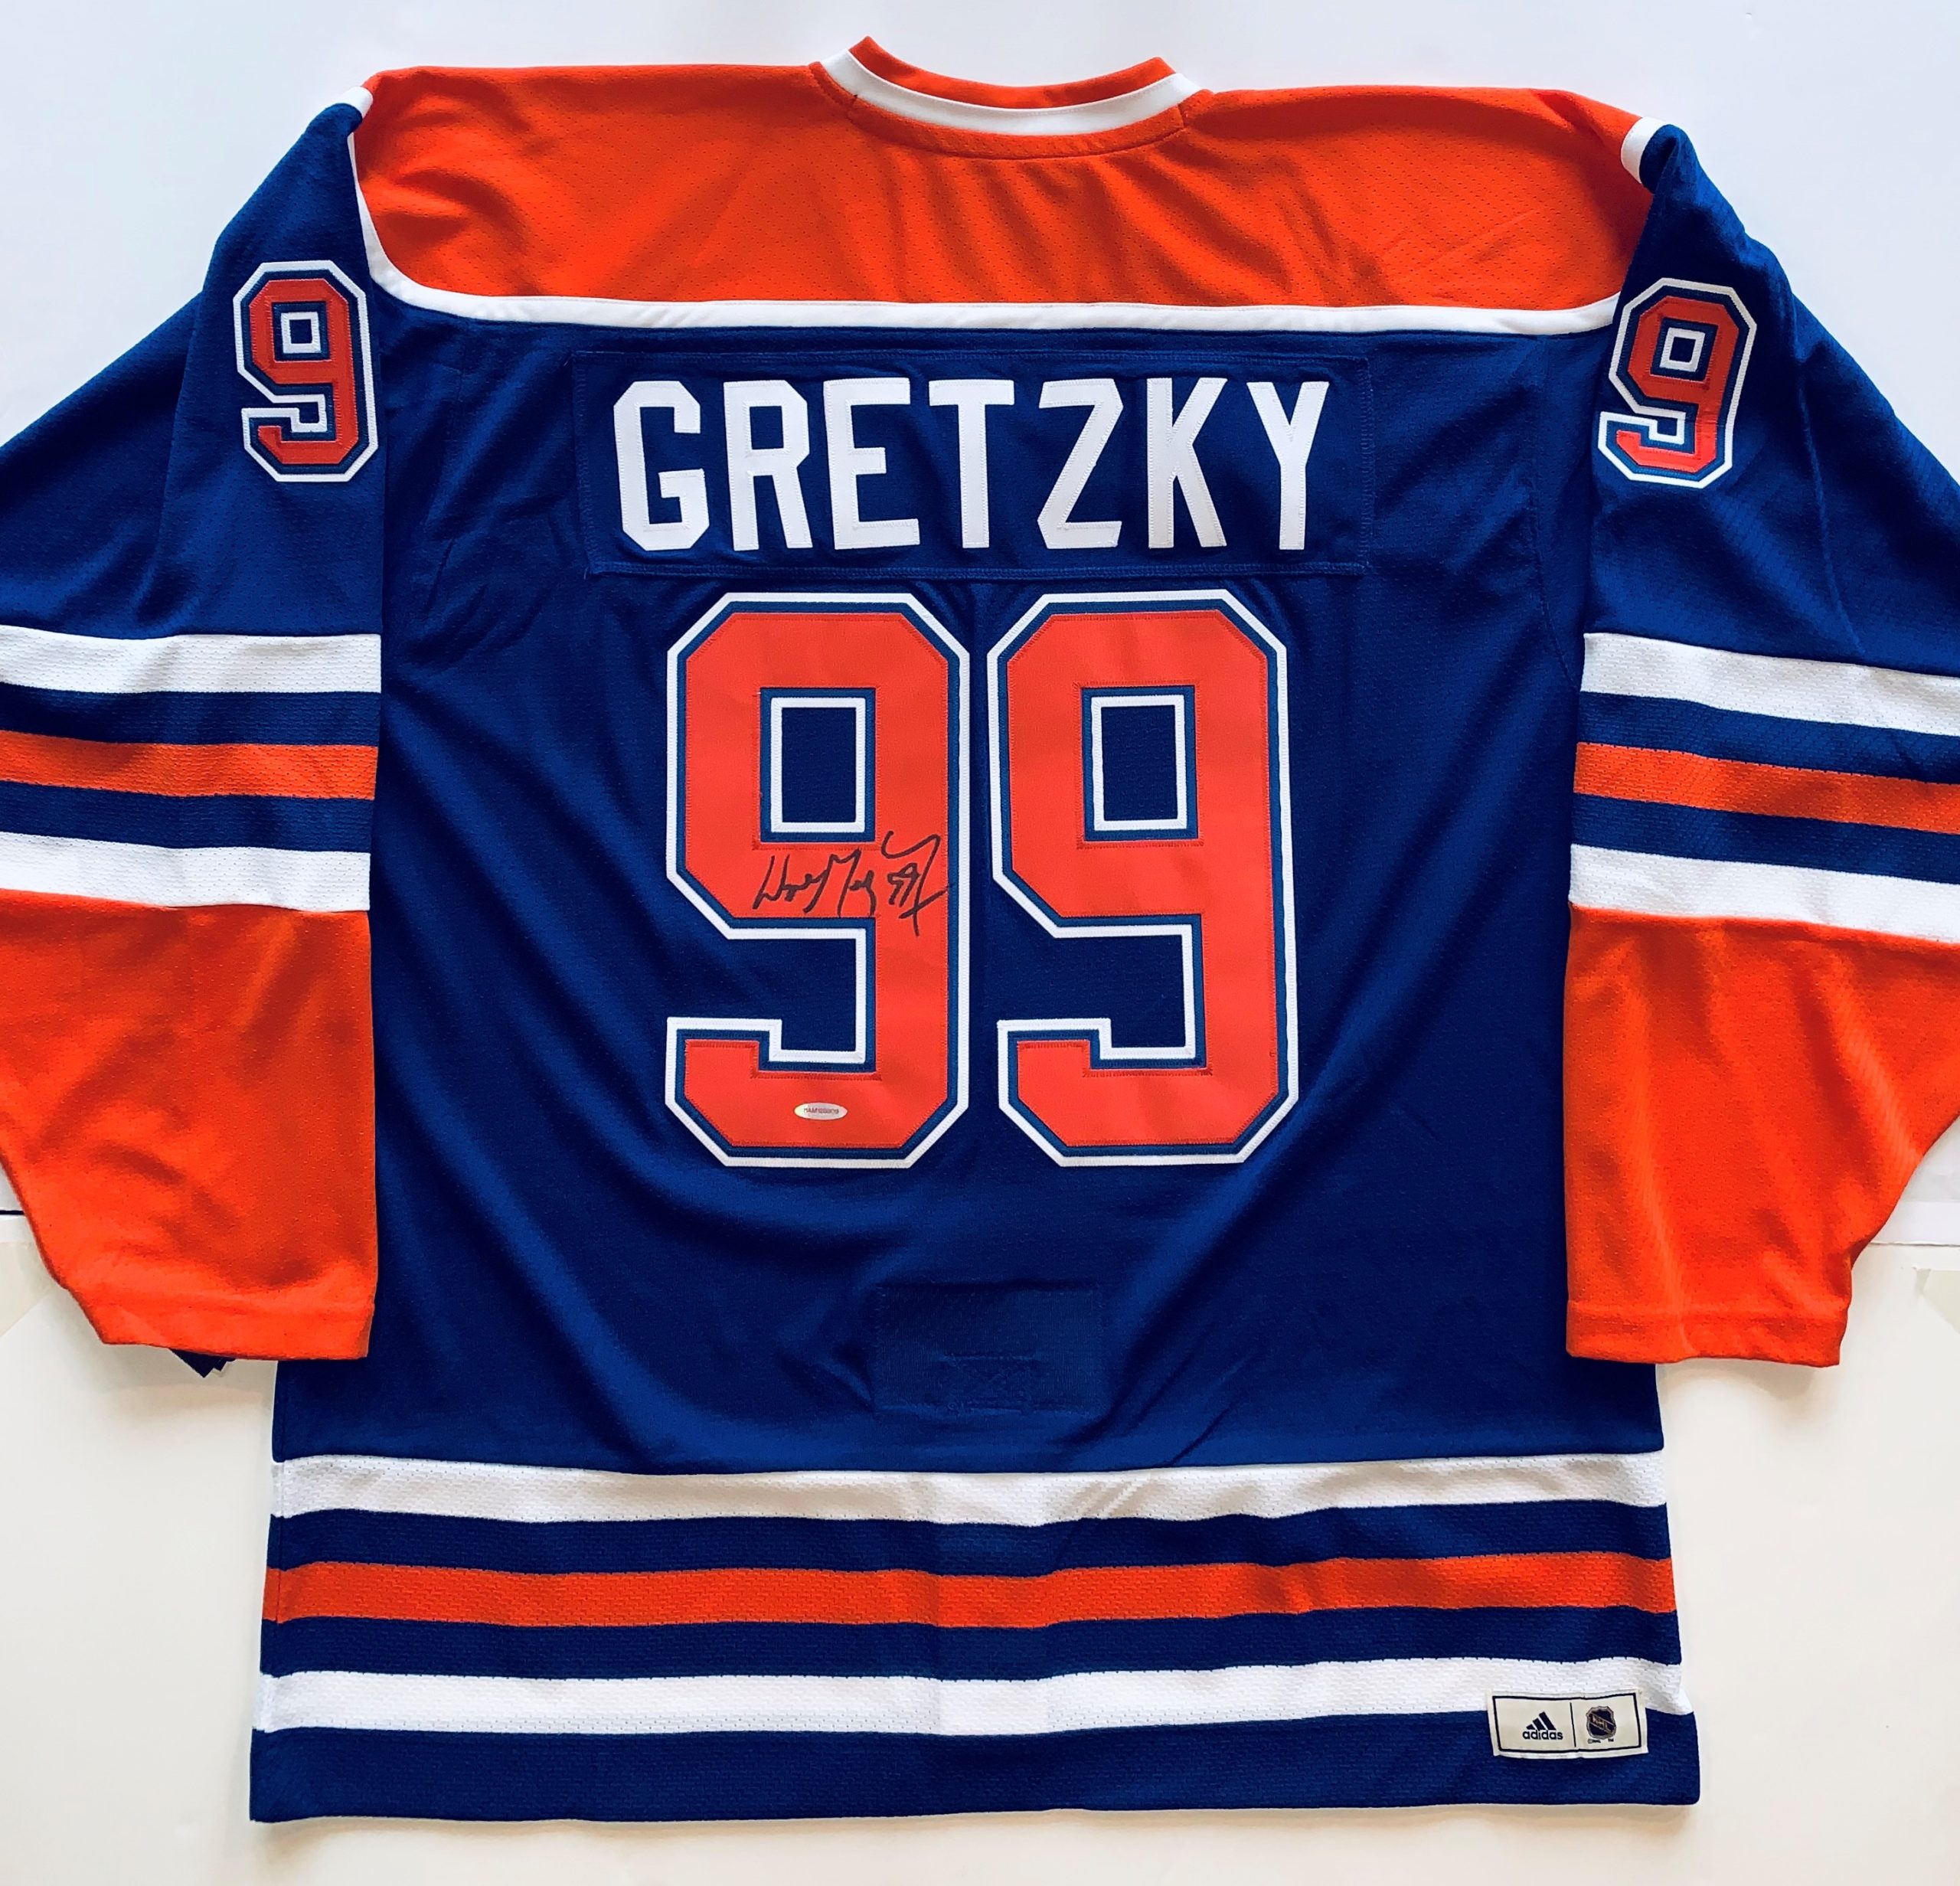 Edmonton Oilers Wayne Gretzky Blue Heroes of Hockey Jersey